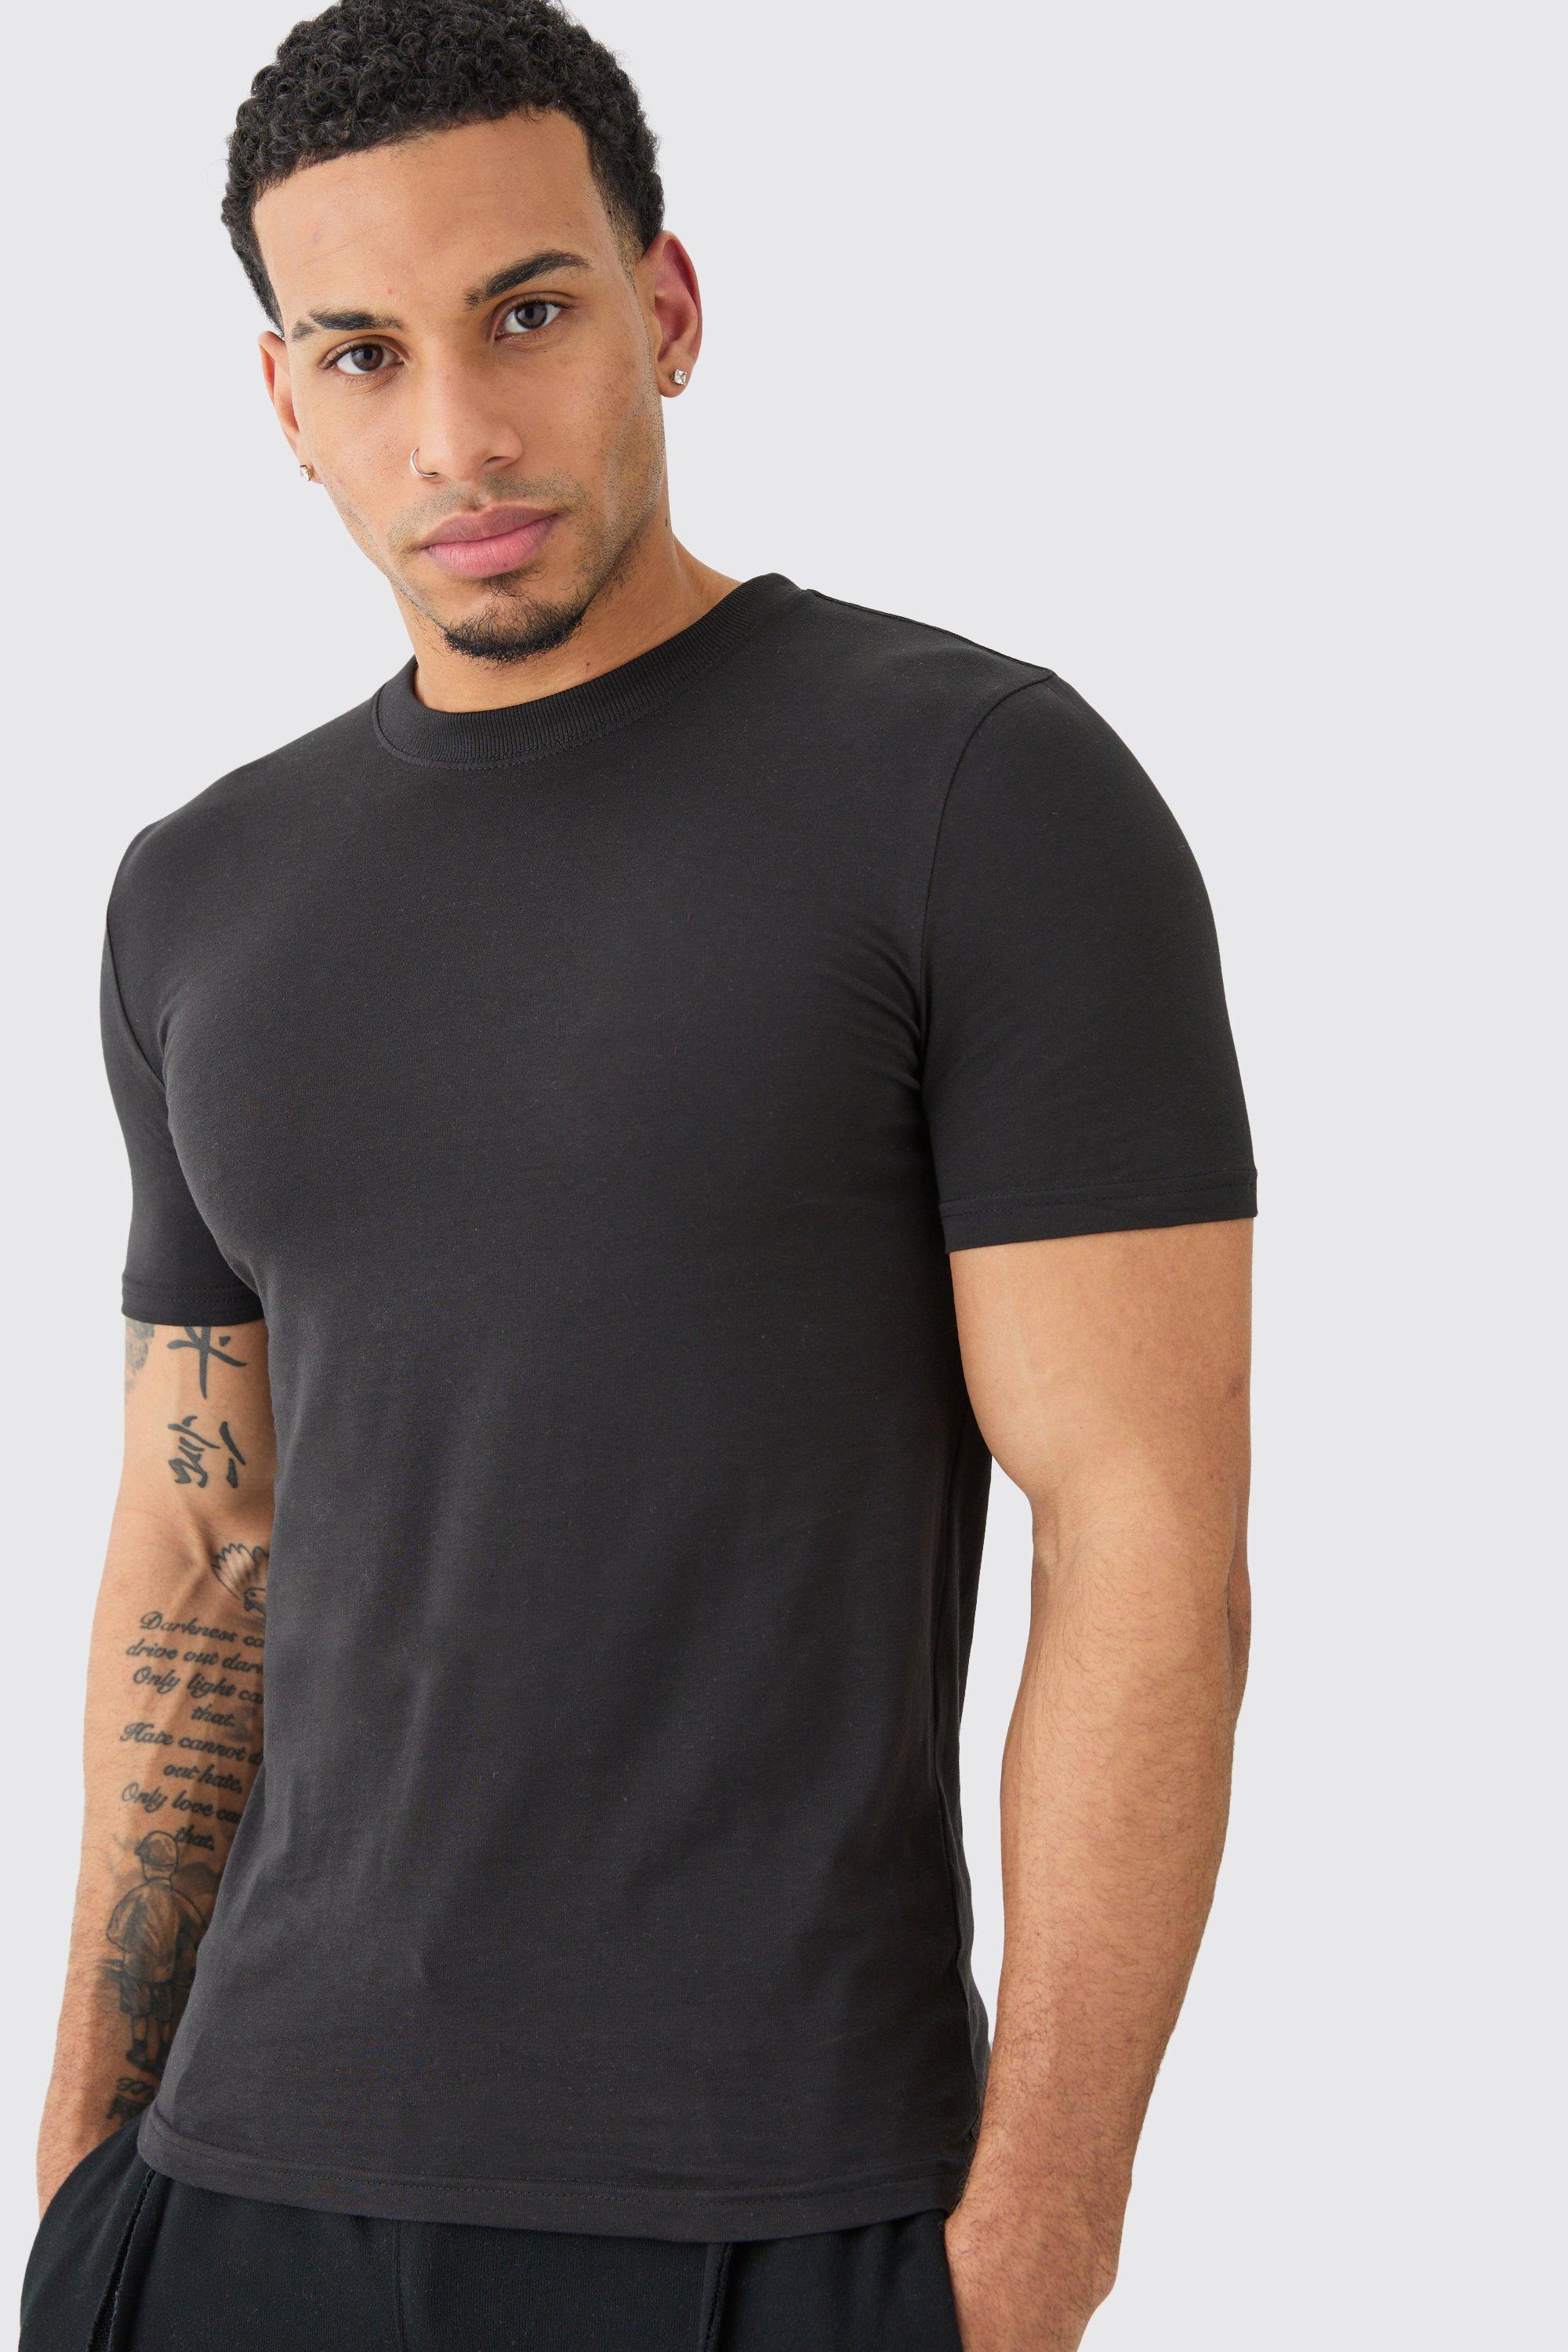 Mens Black Basic Muscle Fit Crew Neck T-shirt, Black